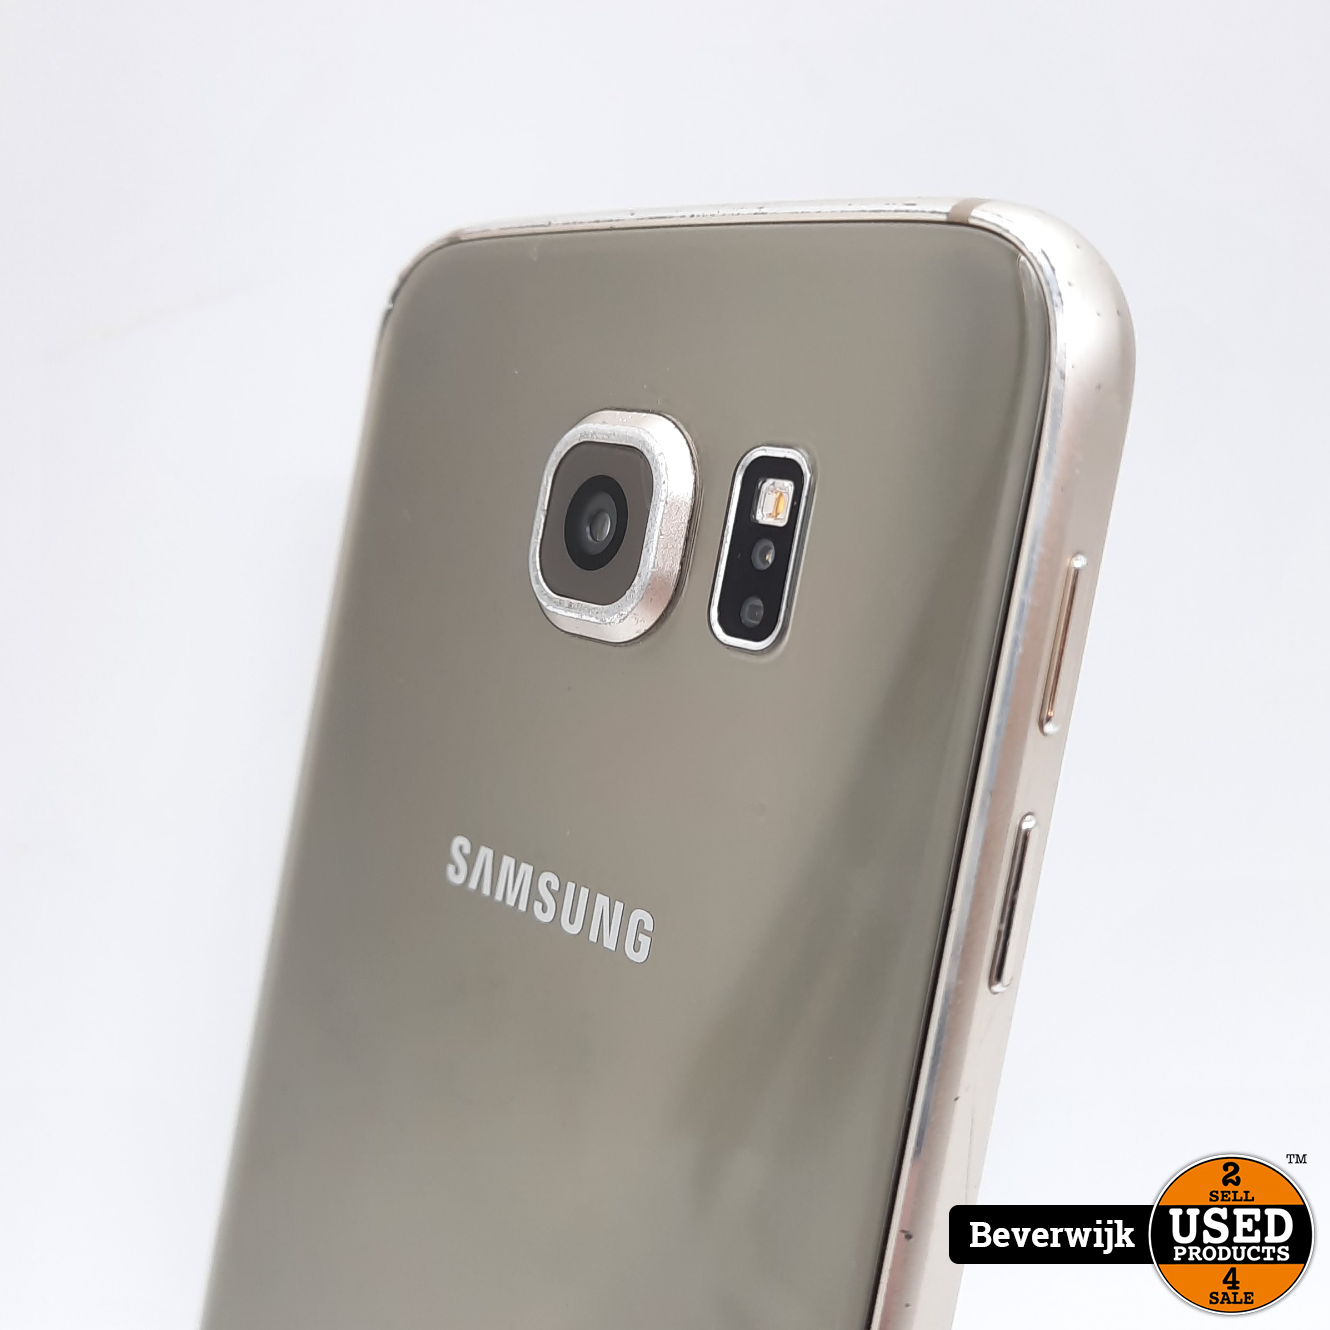 Samsung Galaxy S6 32 Goud - In Goede Staat! - Used Products Beverwijk